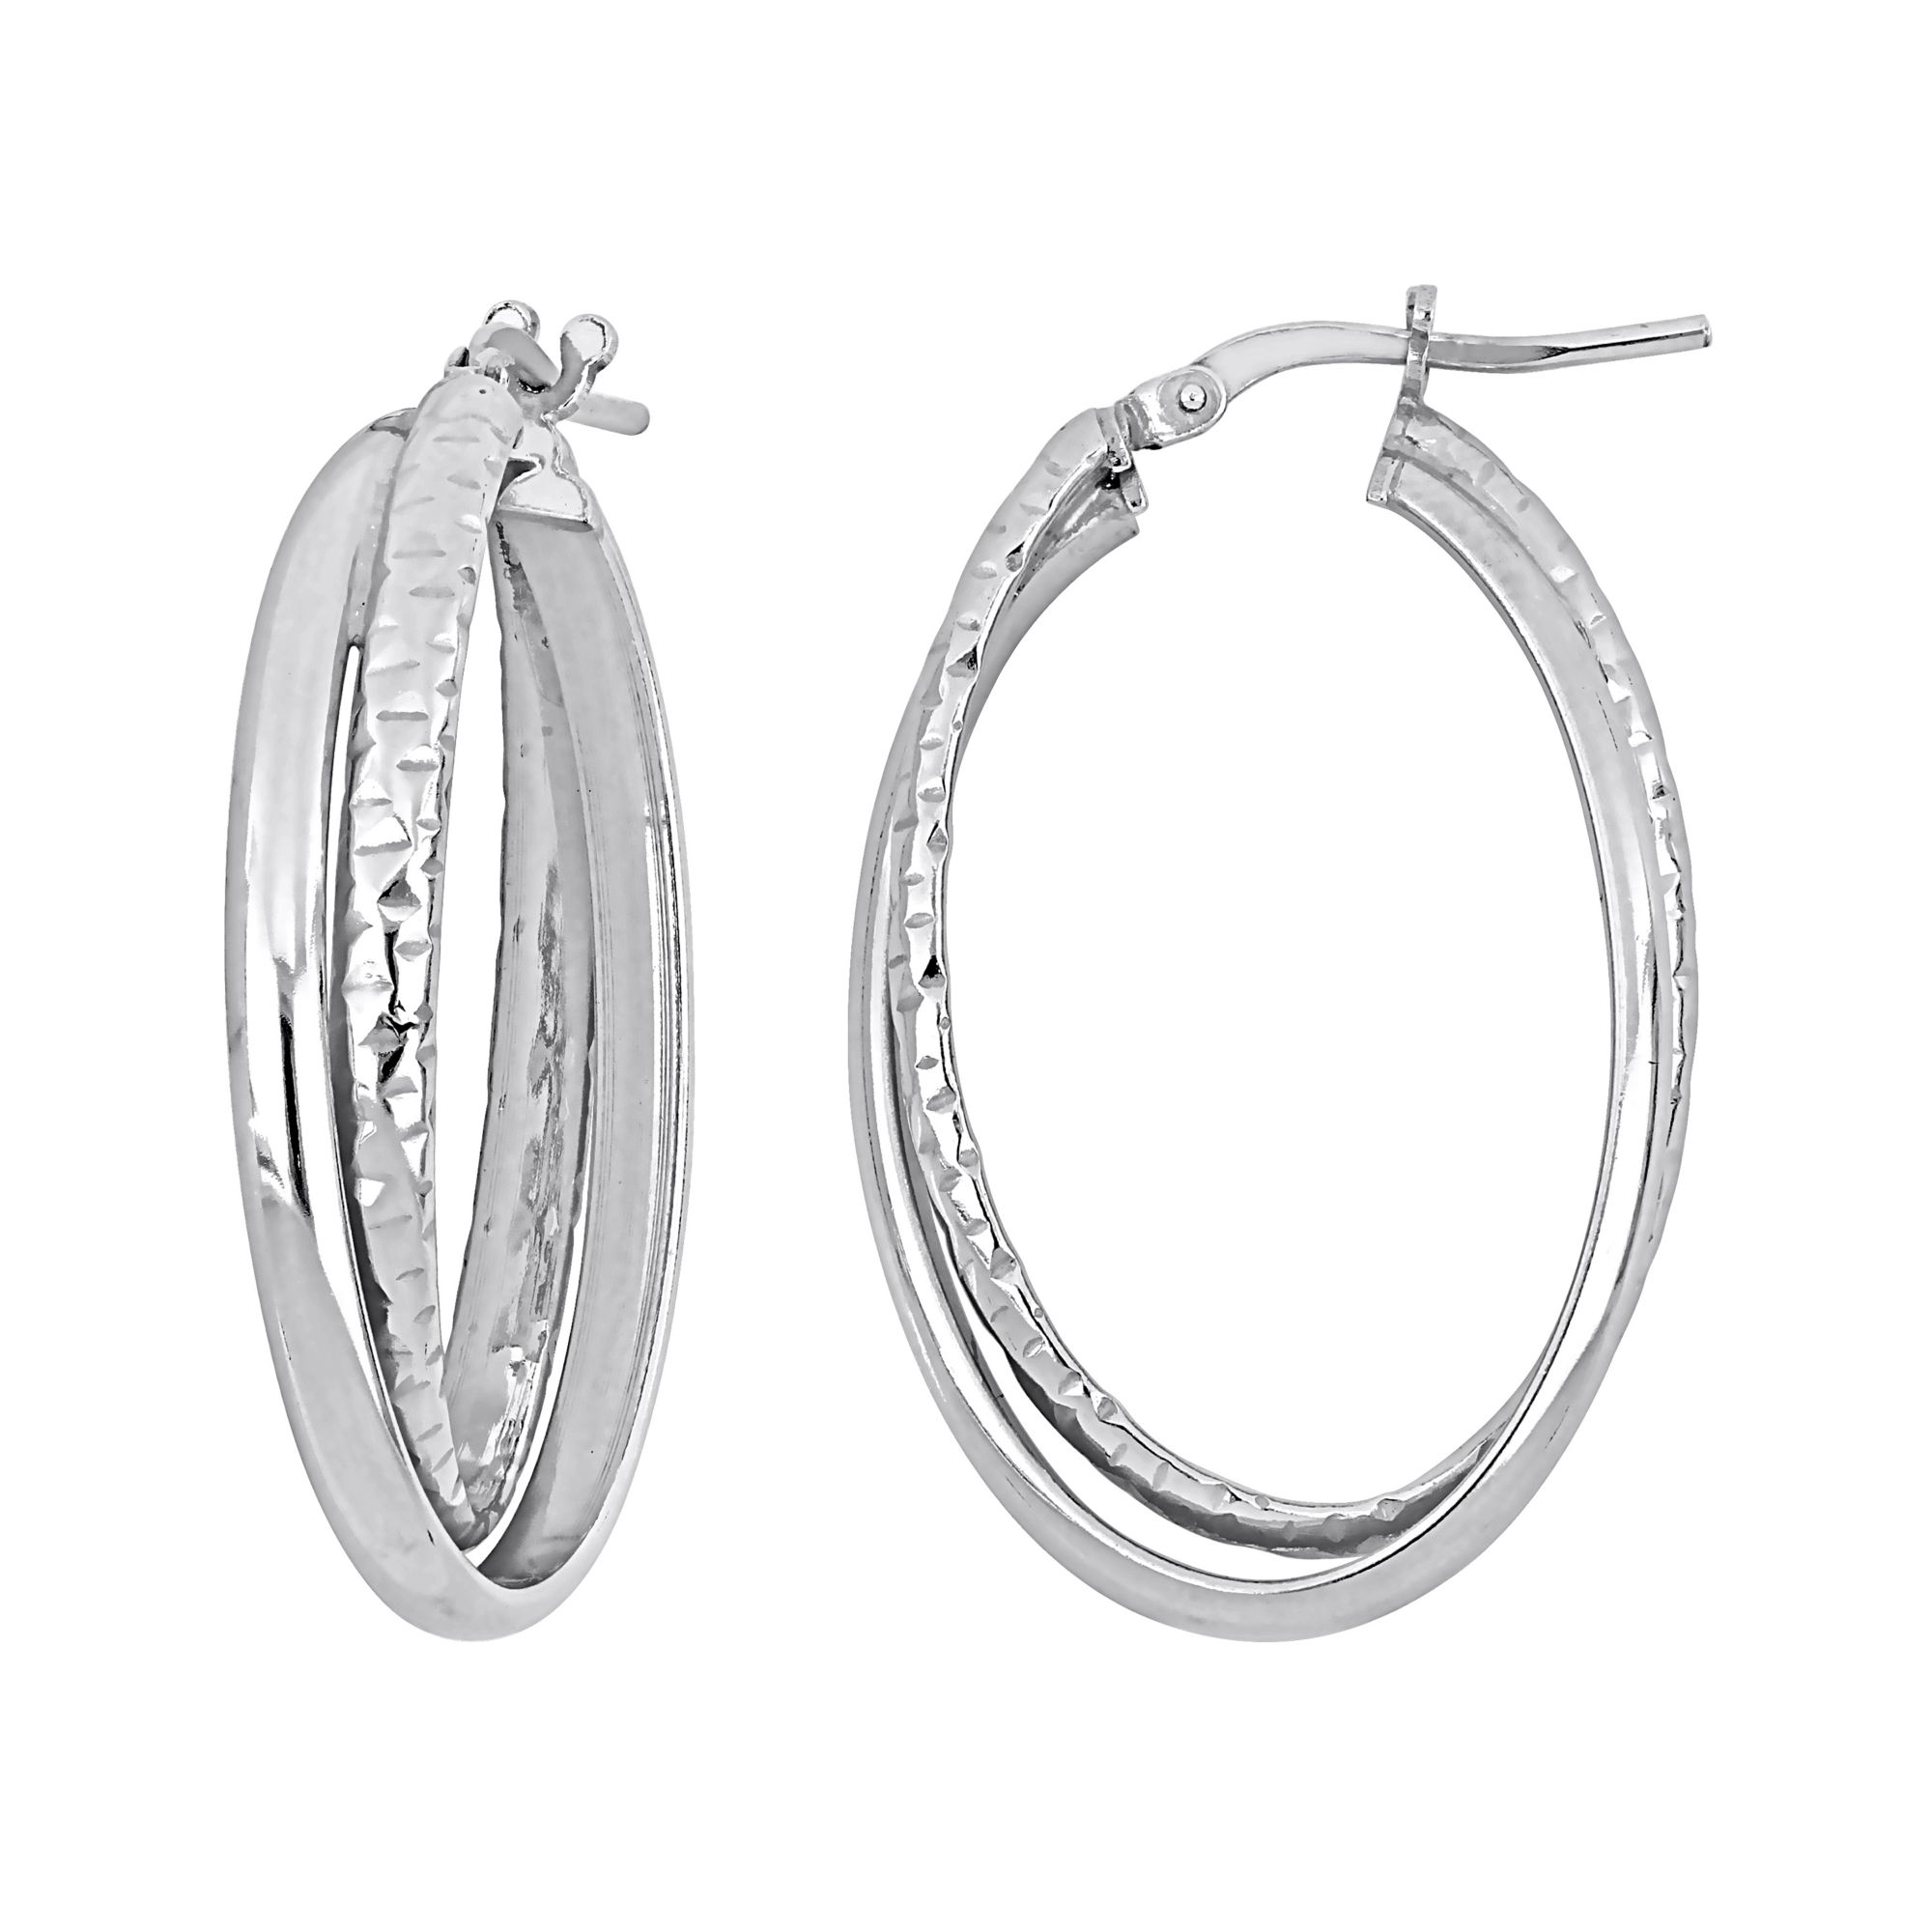 35mm Entwined Hoop Earrings in Sterling Silver